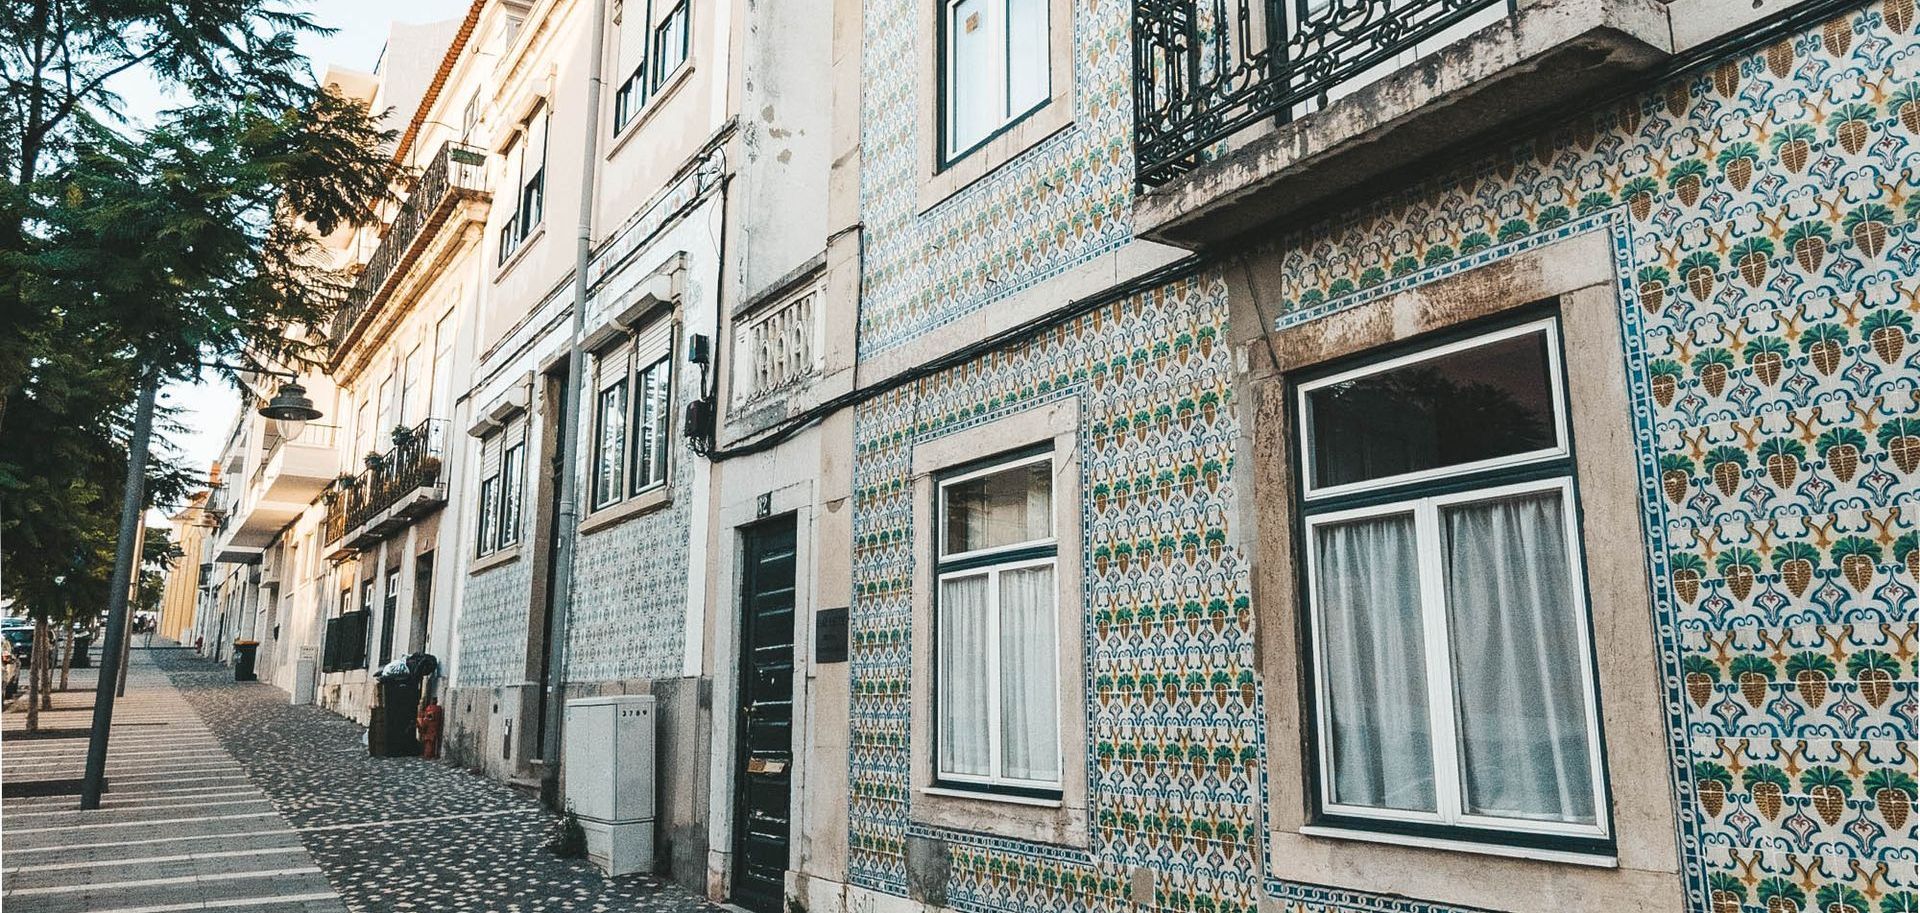 Alojamento local portuguese street 